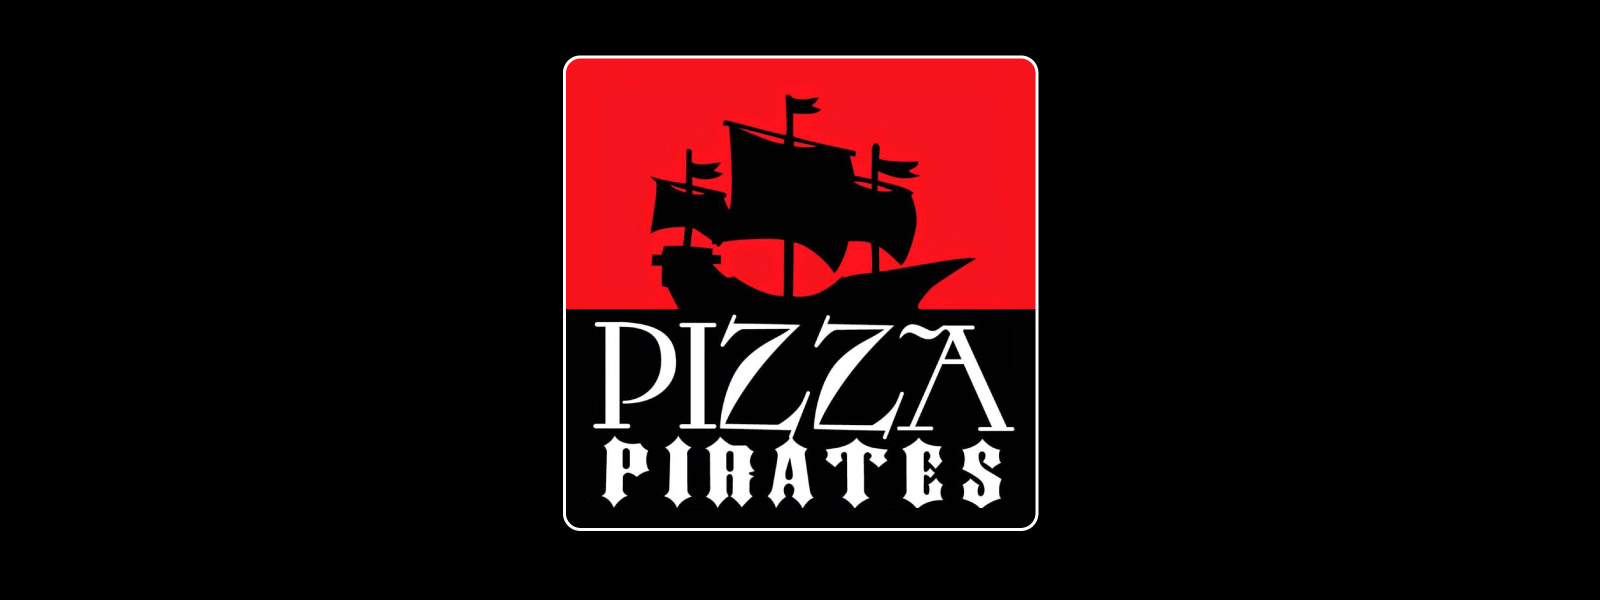 Pizza-Pirates-header